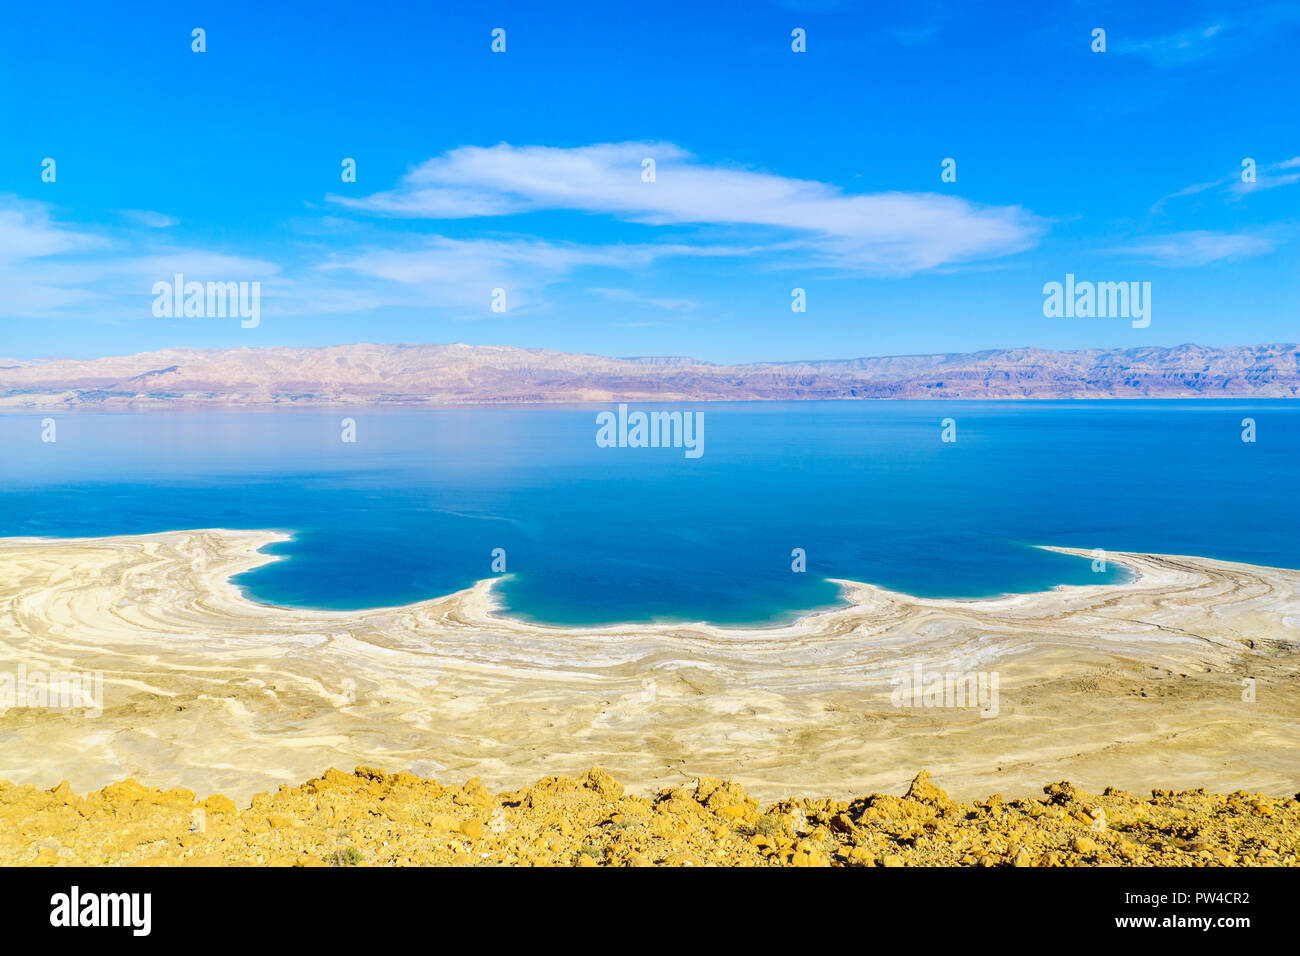 Landscape of the coastline Dead Sea, between Israel and Jordan Photo -